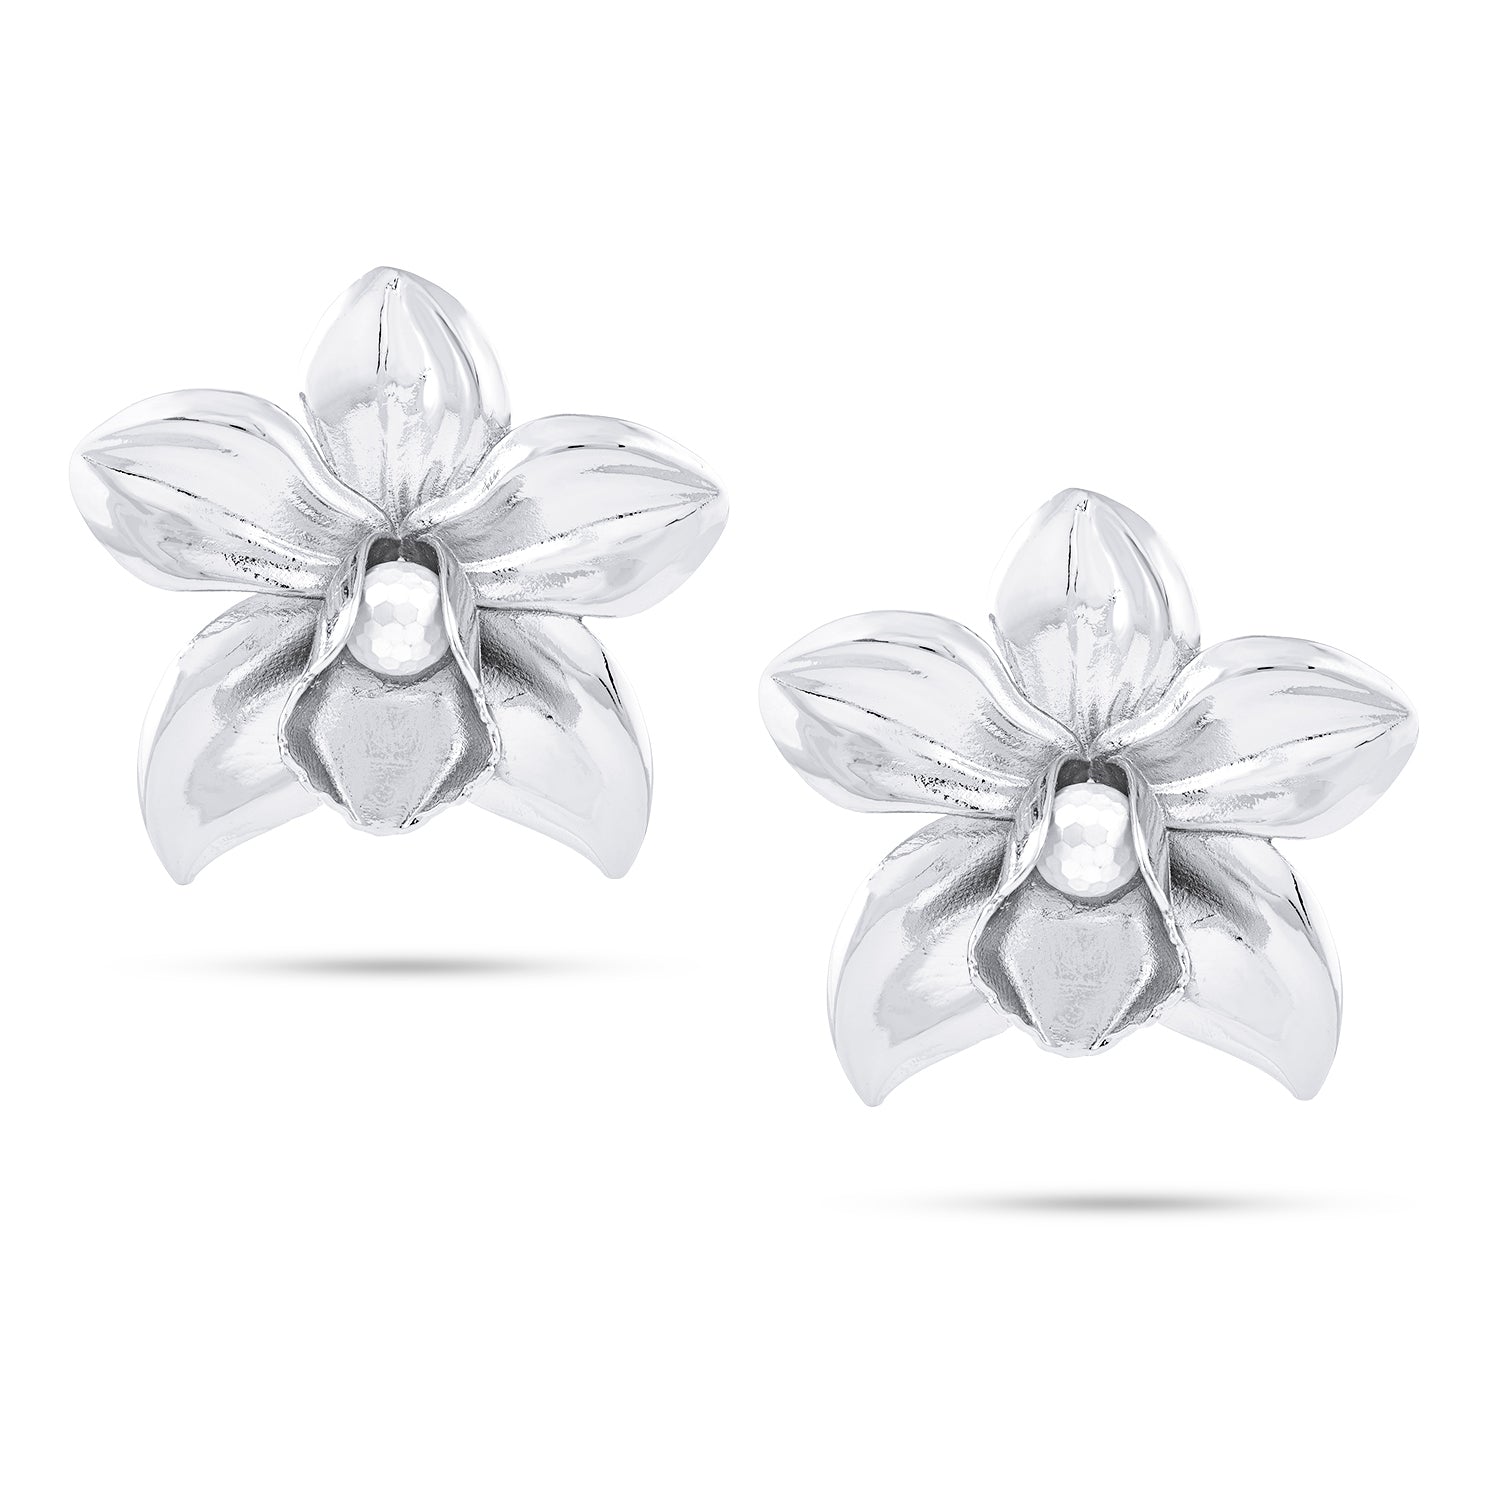 Metallic Orchid Earring (Silver)